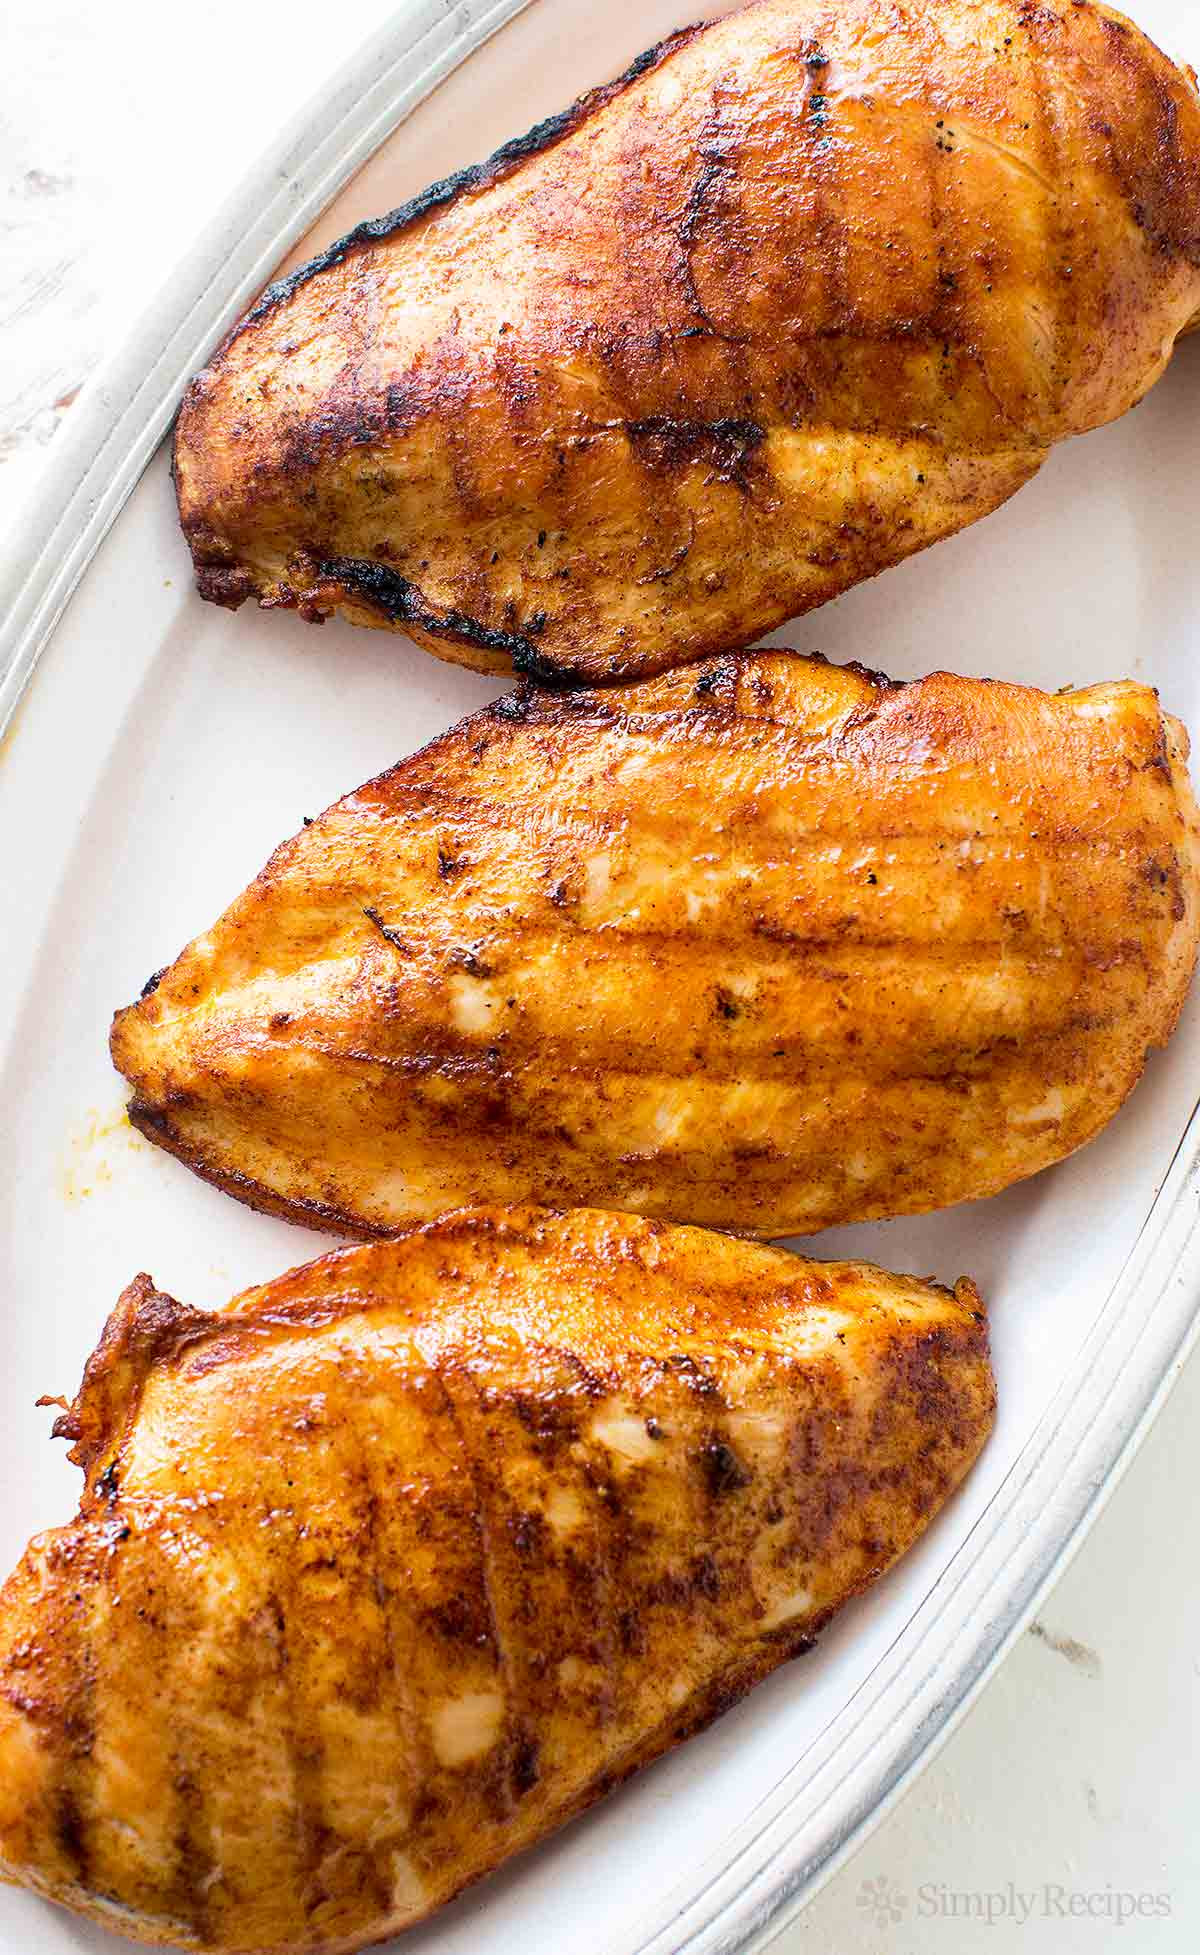 Baking Boneless Chicken Breasts
 how long to bake boneless skinless chicken breasts at 400